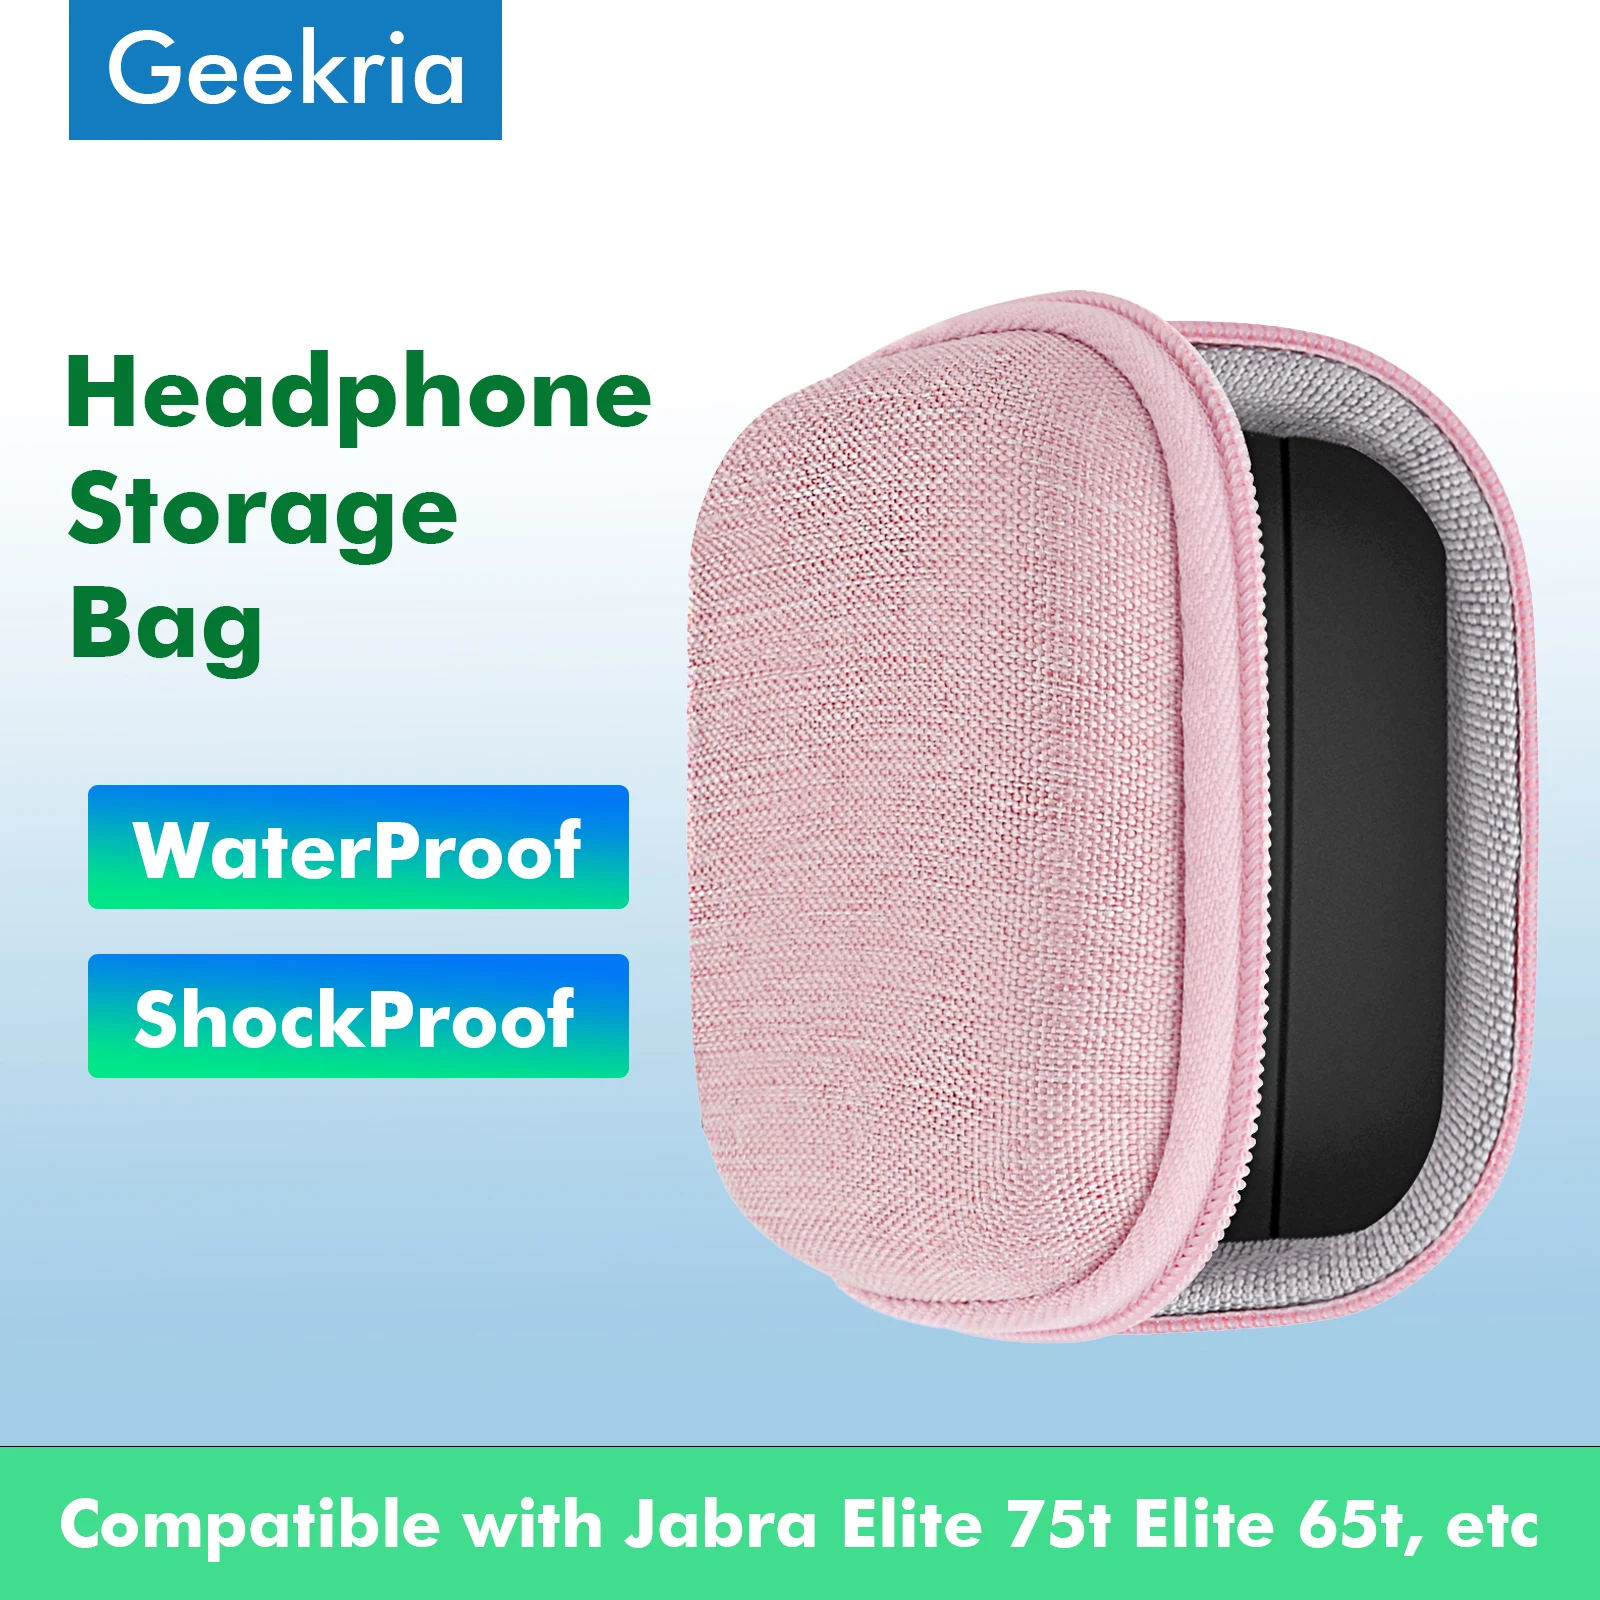 

Geekria Headphones Case For Jabra Elite 75t Elite 65t True Wireless Earbuds, Hard Portable Headset Bag for Accessories Storage